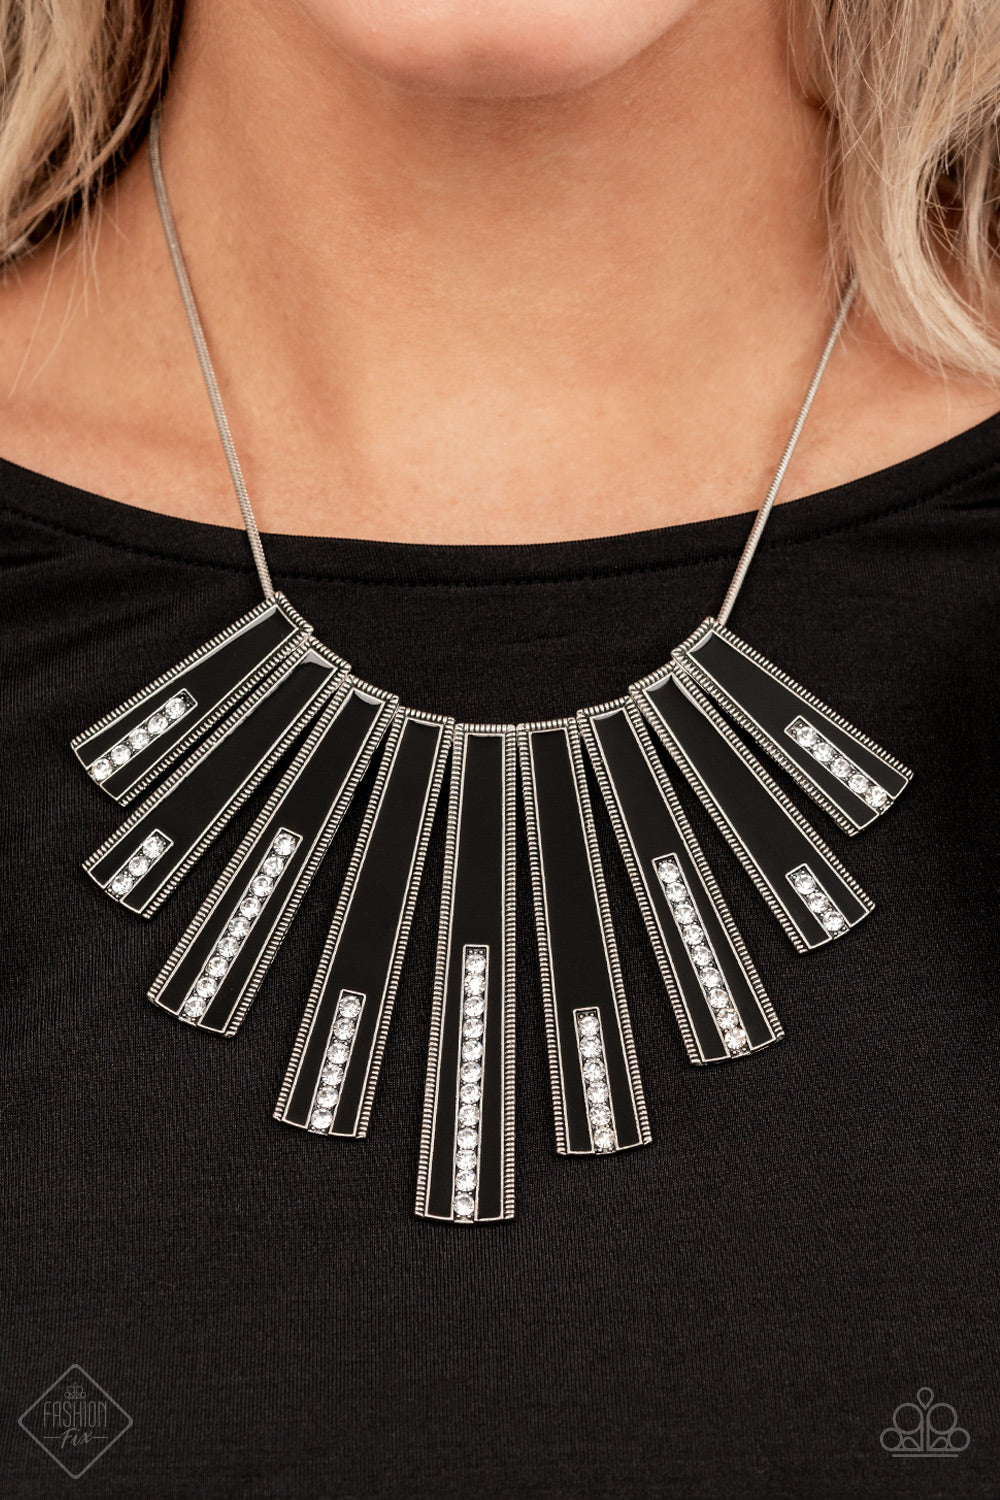 Paparazzi FAN-tastically Deco Black Short Necklace - Fashion Fix Fiercely 5th Avenue September 2021